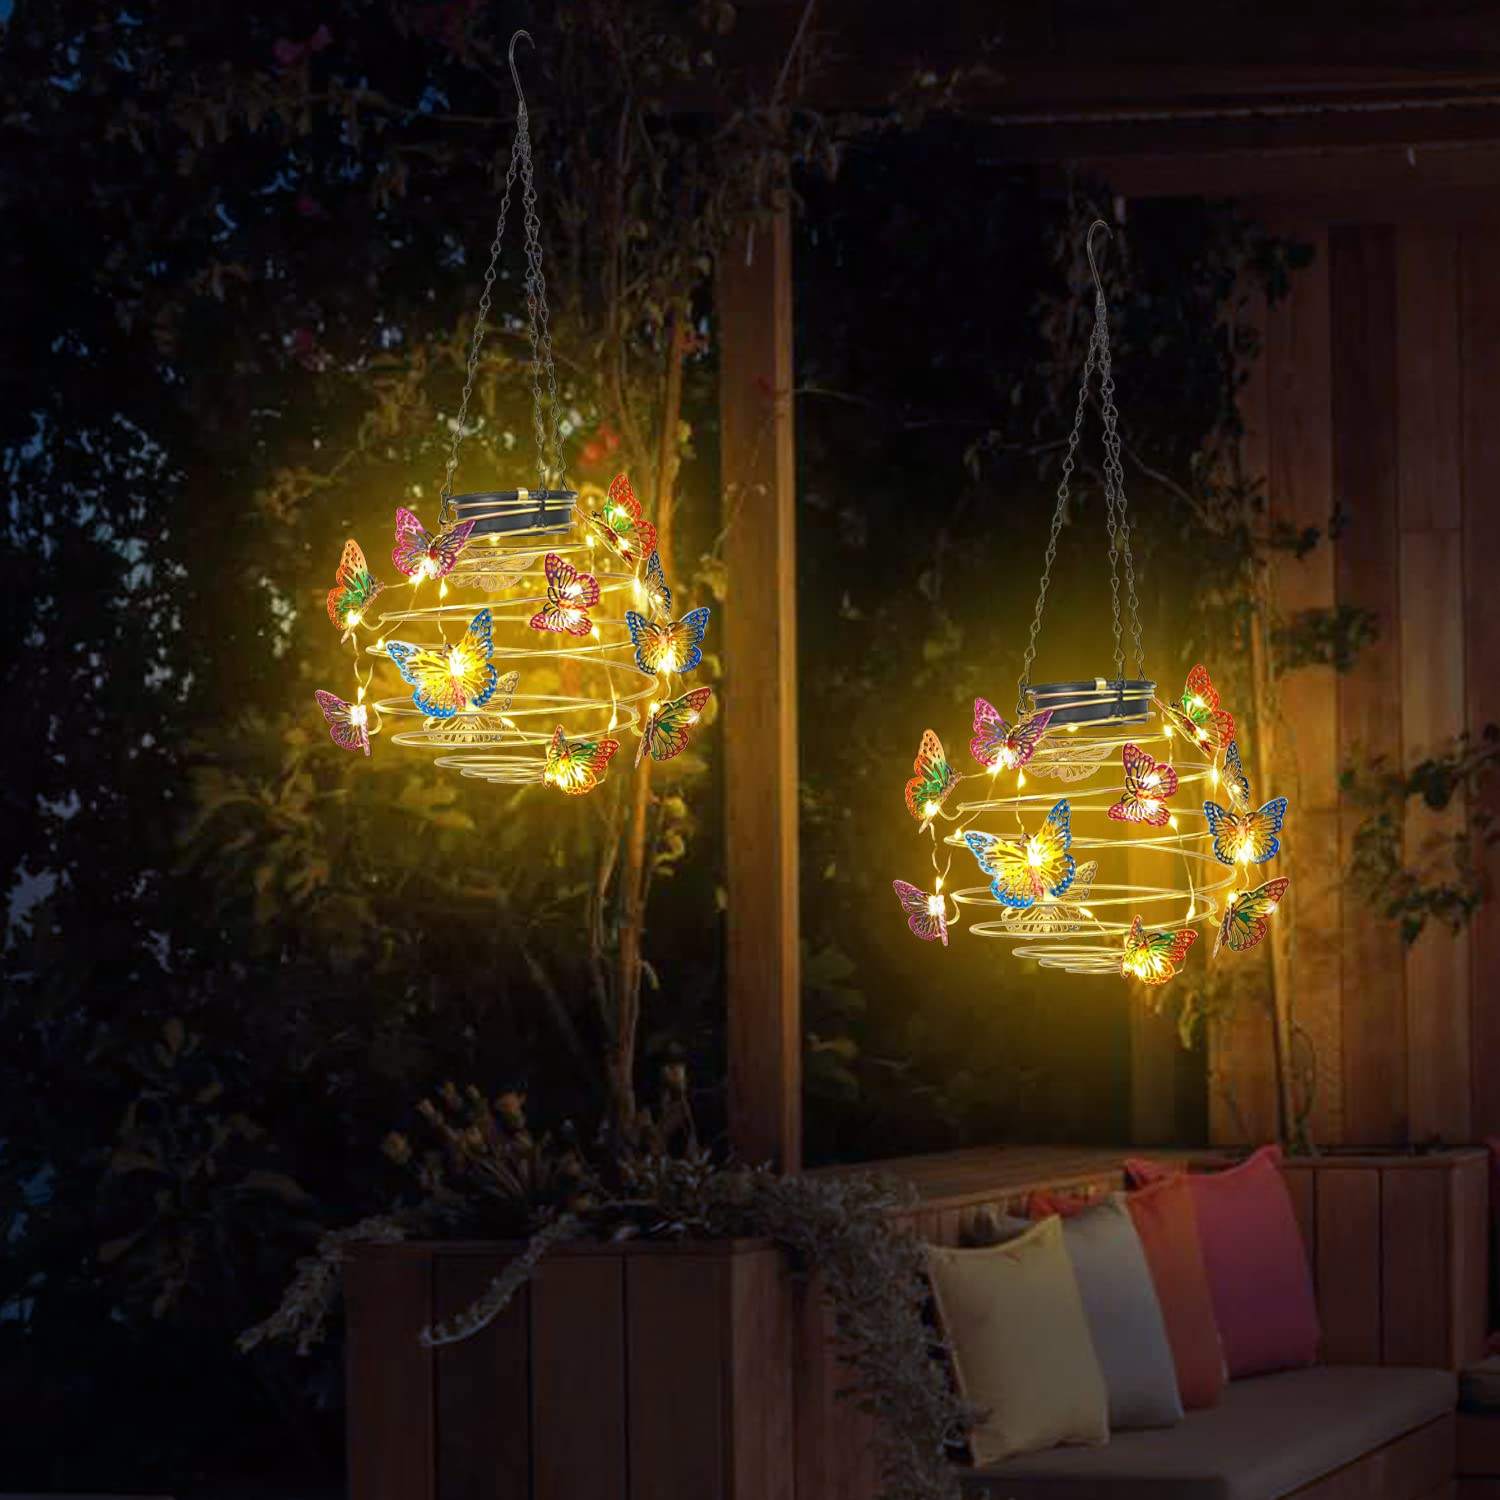 Outdoor Solar Hanging Waterproof 60 Led Metal Pineapple Lantern Lights For Garden Patio Yard Lawn Tabletop Decoration